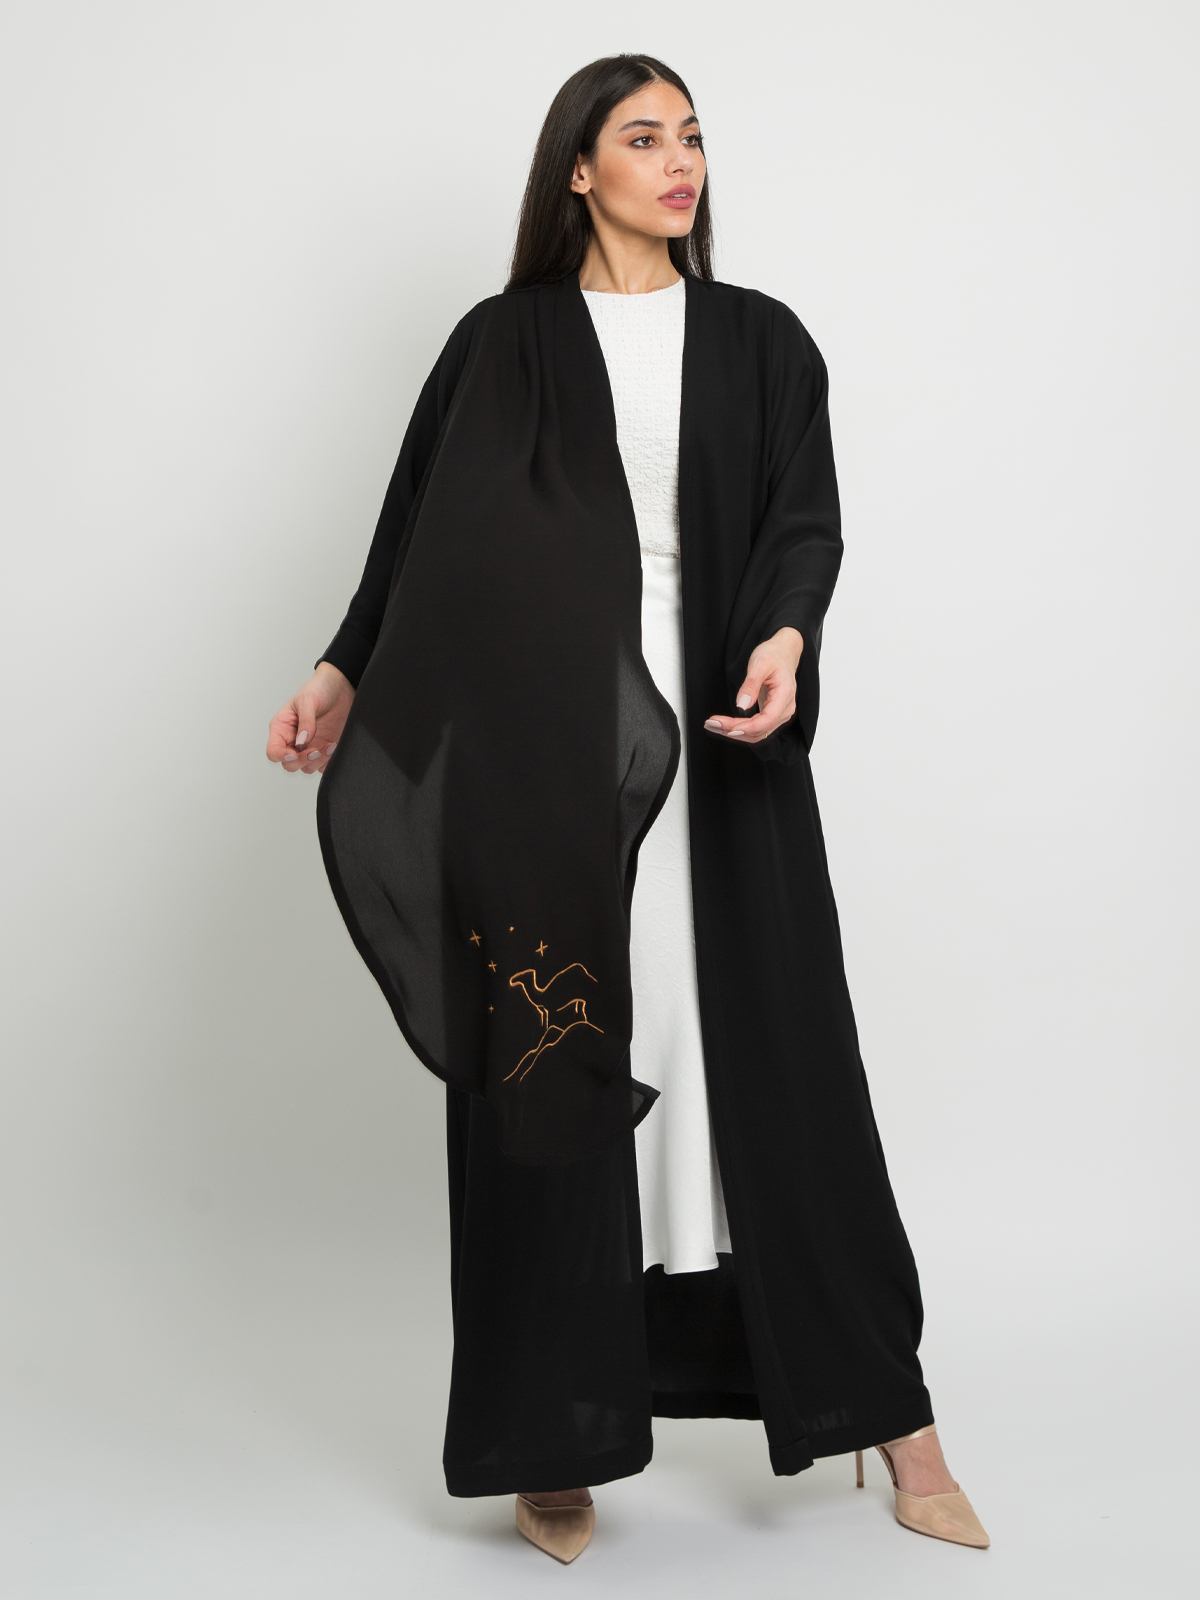 Camel Embroidery Scarf Abaya - Regular-cut Black Long Abaya with Attached Scarf